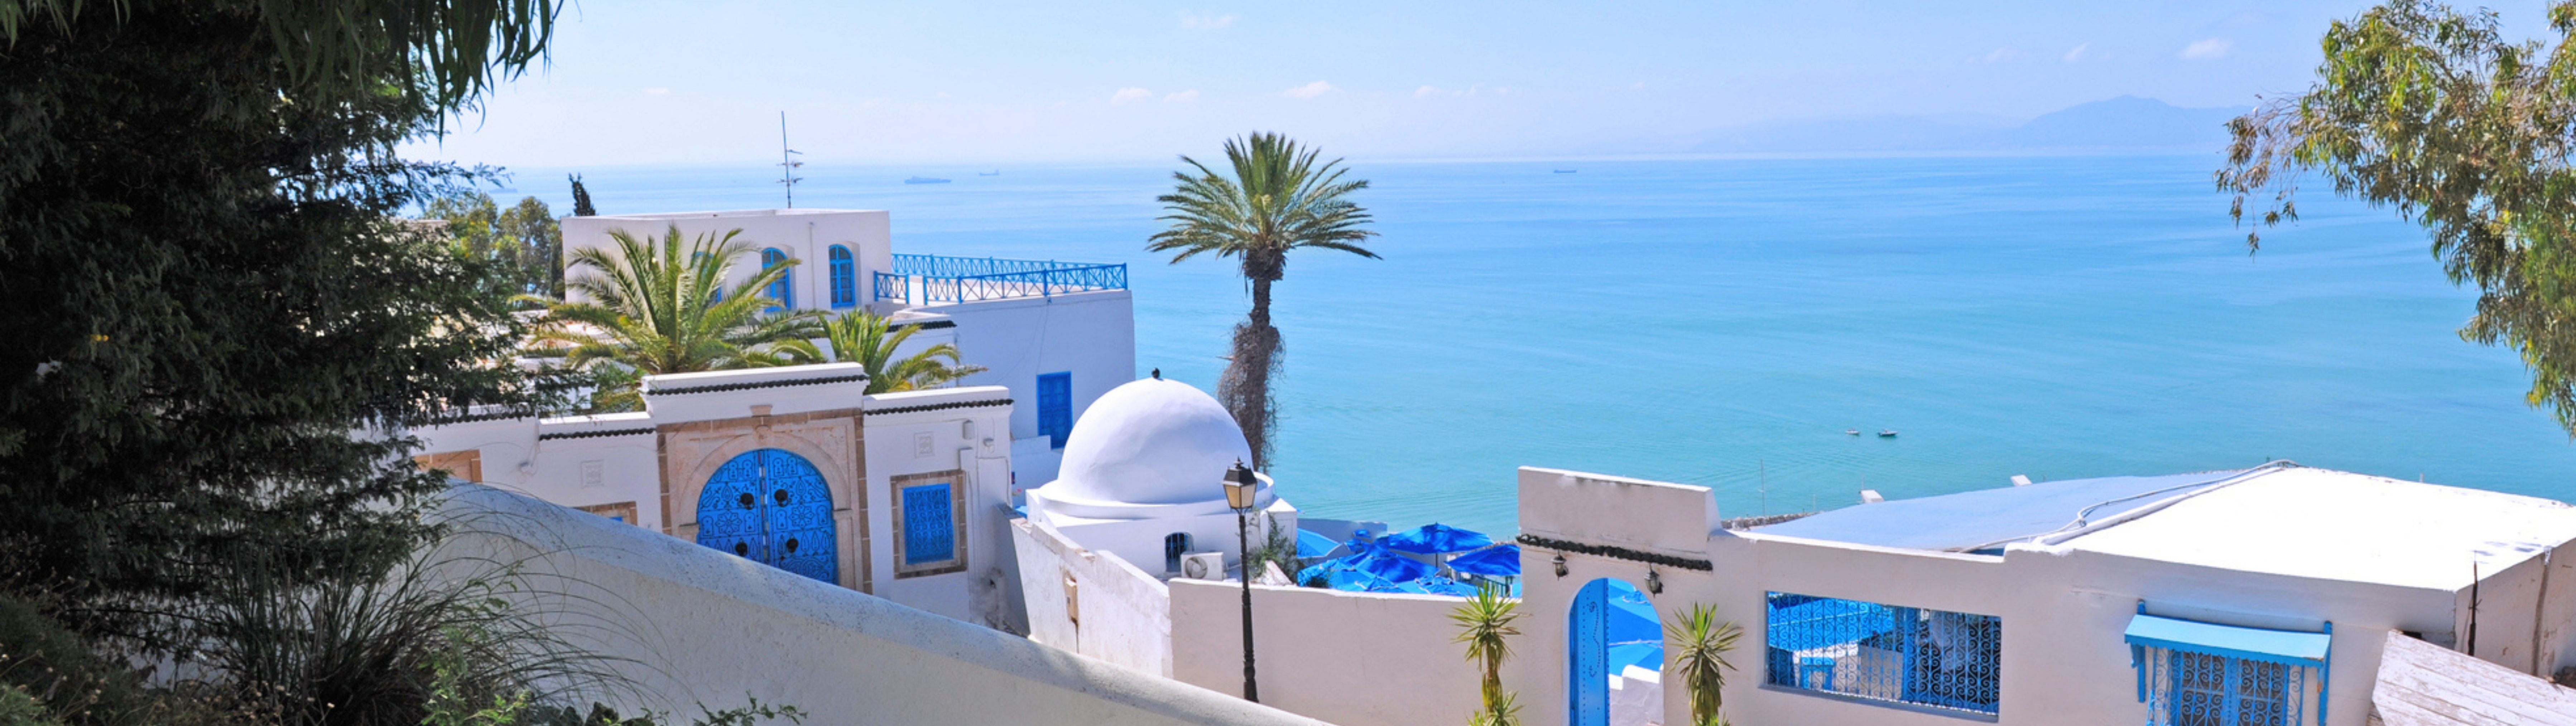 Goedkope vakantie in Tunesië